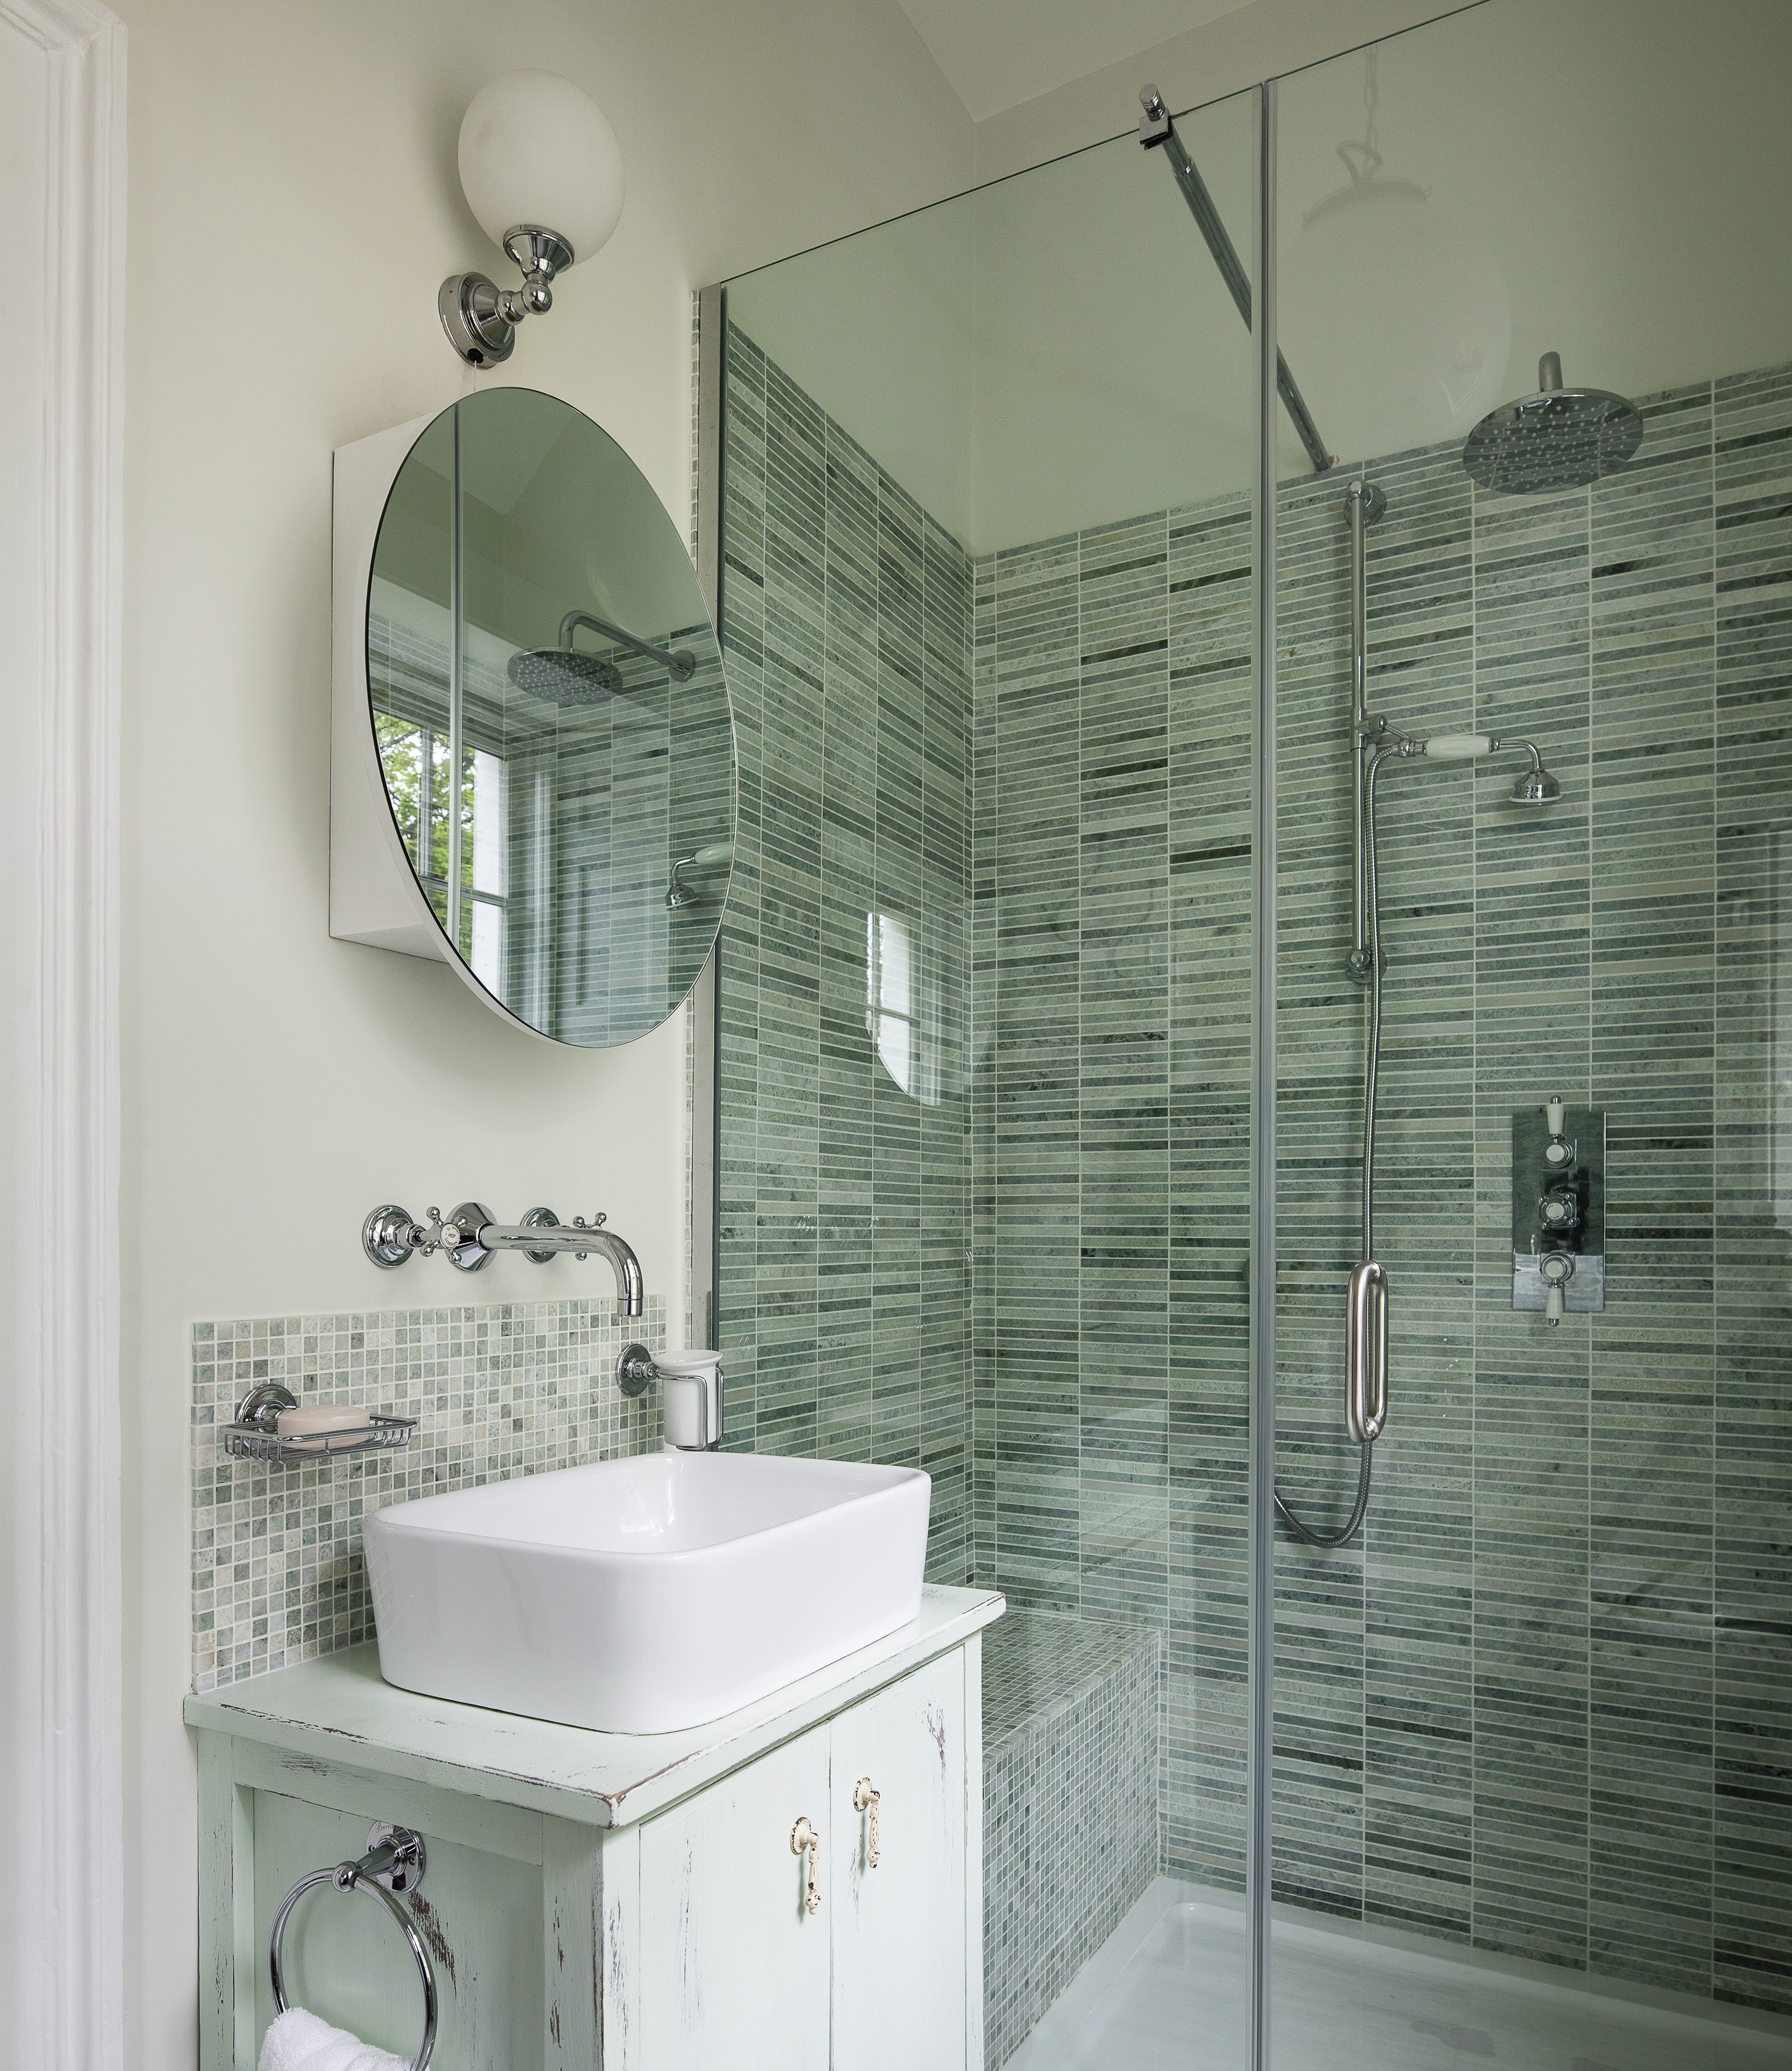 Shower house. Ванная комната Dublin. Плитка григорианский стиль. Дублин ванна. Bathroom Design Dublin.